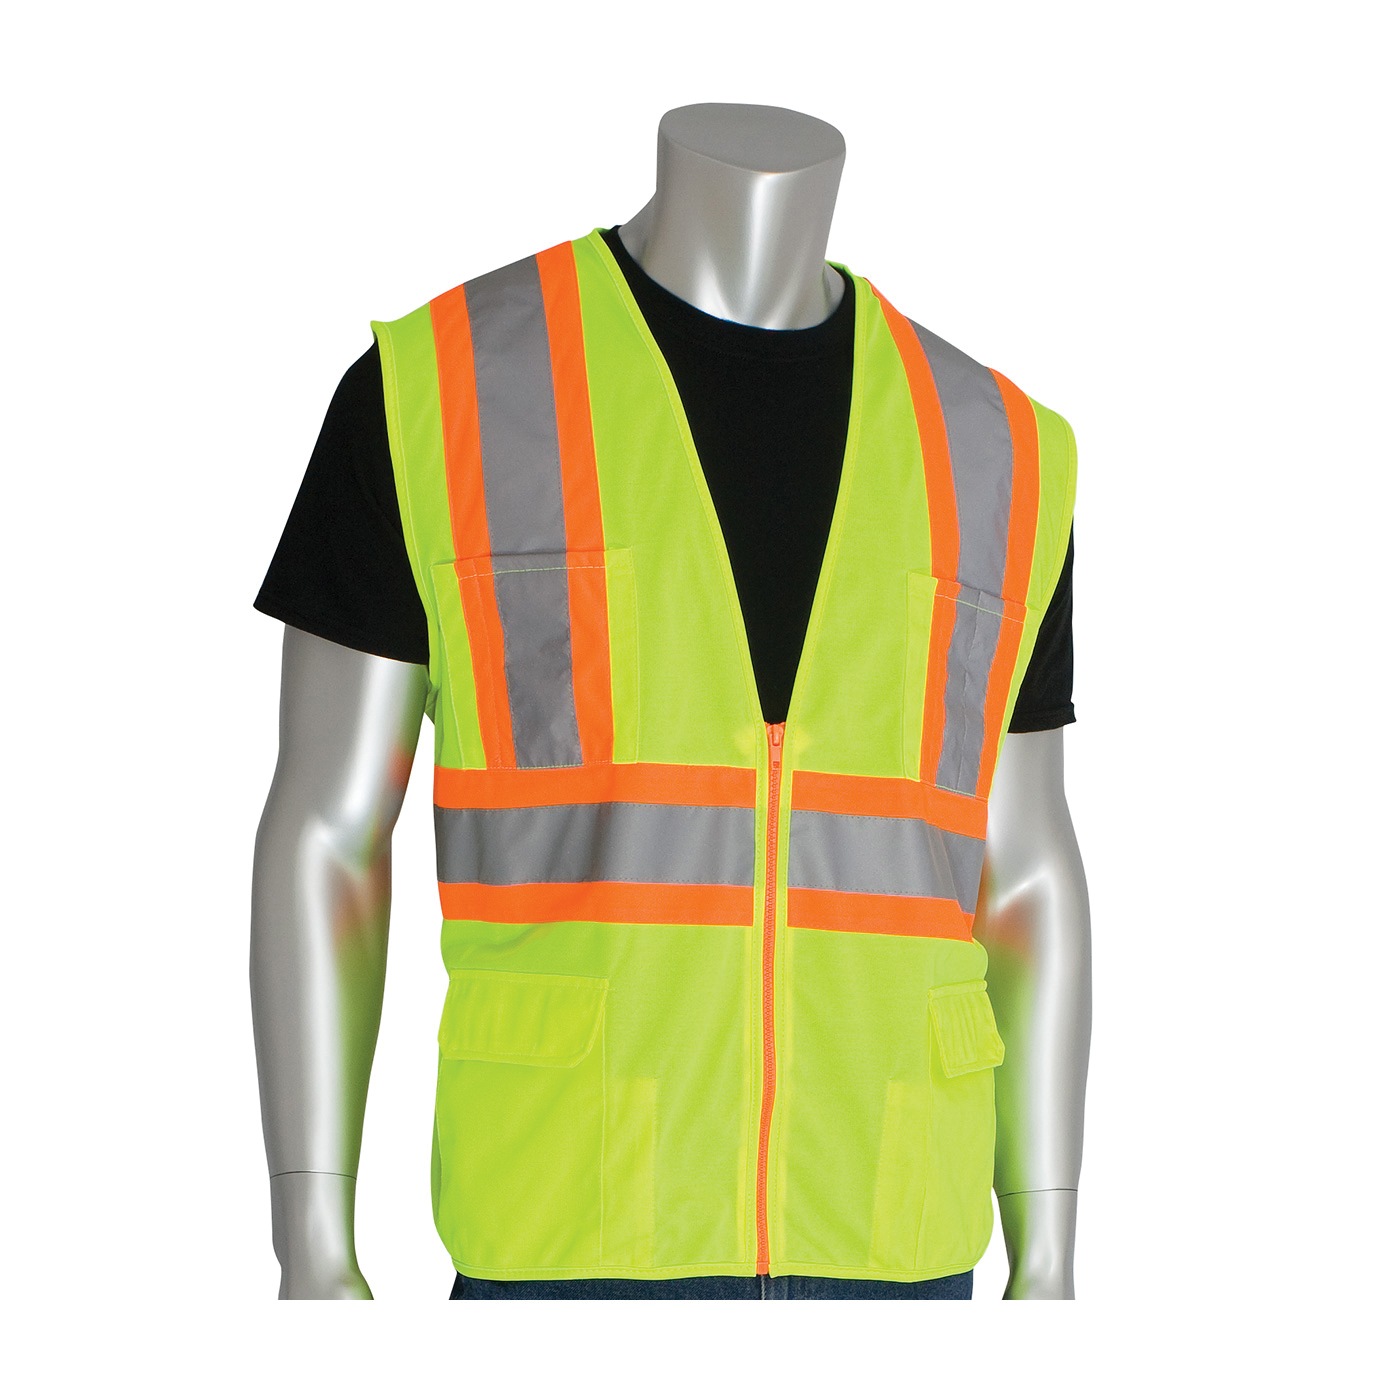 PIP® 302-MAPLY-3X 2-Tone Premium Surveyor Safety Vest, 3XL, Hi-Viz Lime Yellow, Polyester, Zipper Closure, 11 Pockets, ANSI Class: Class 2, Specifications Met: ANSI 107 Type R